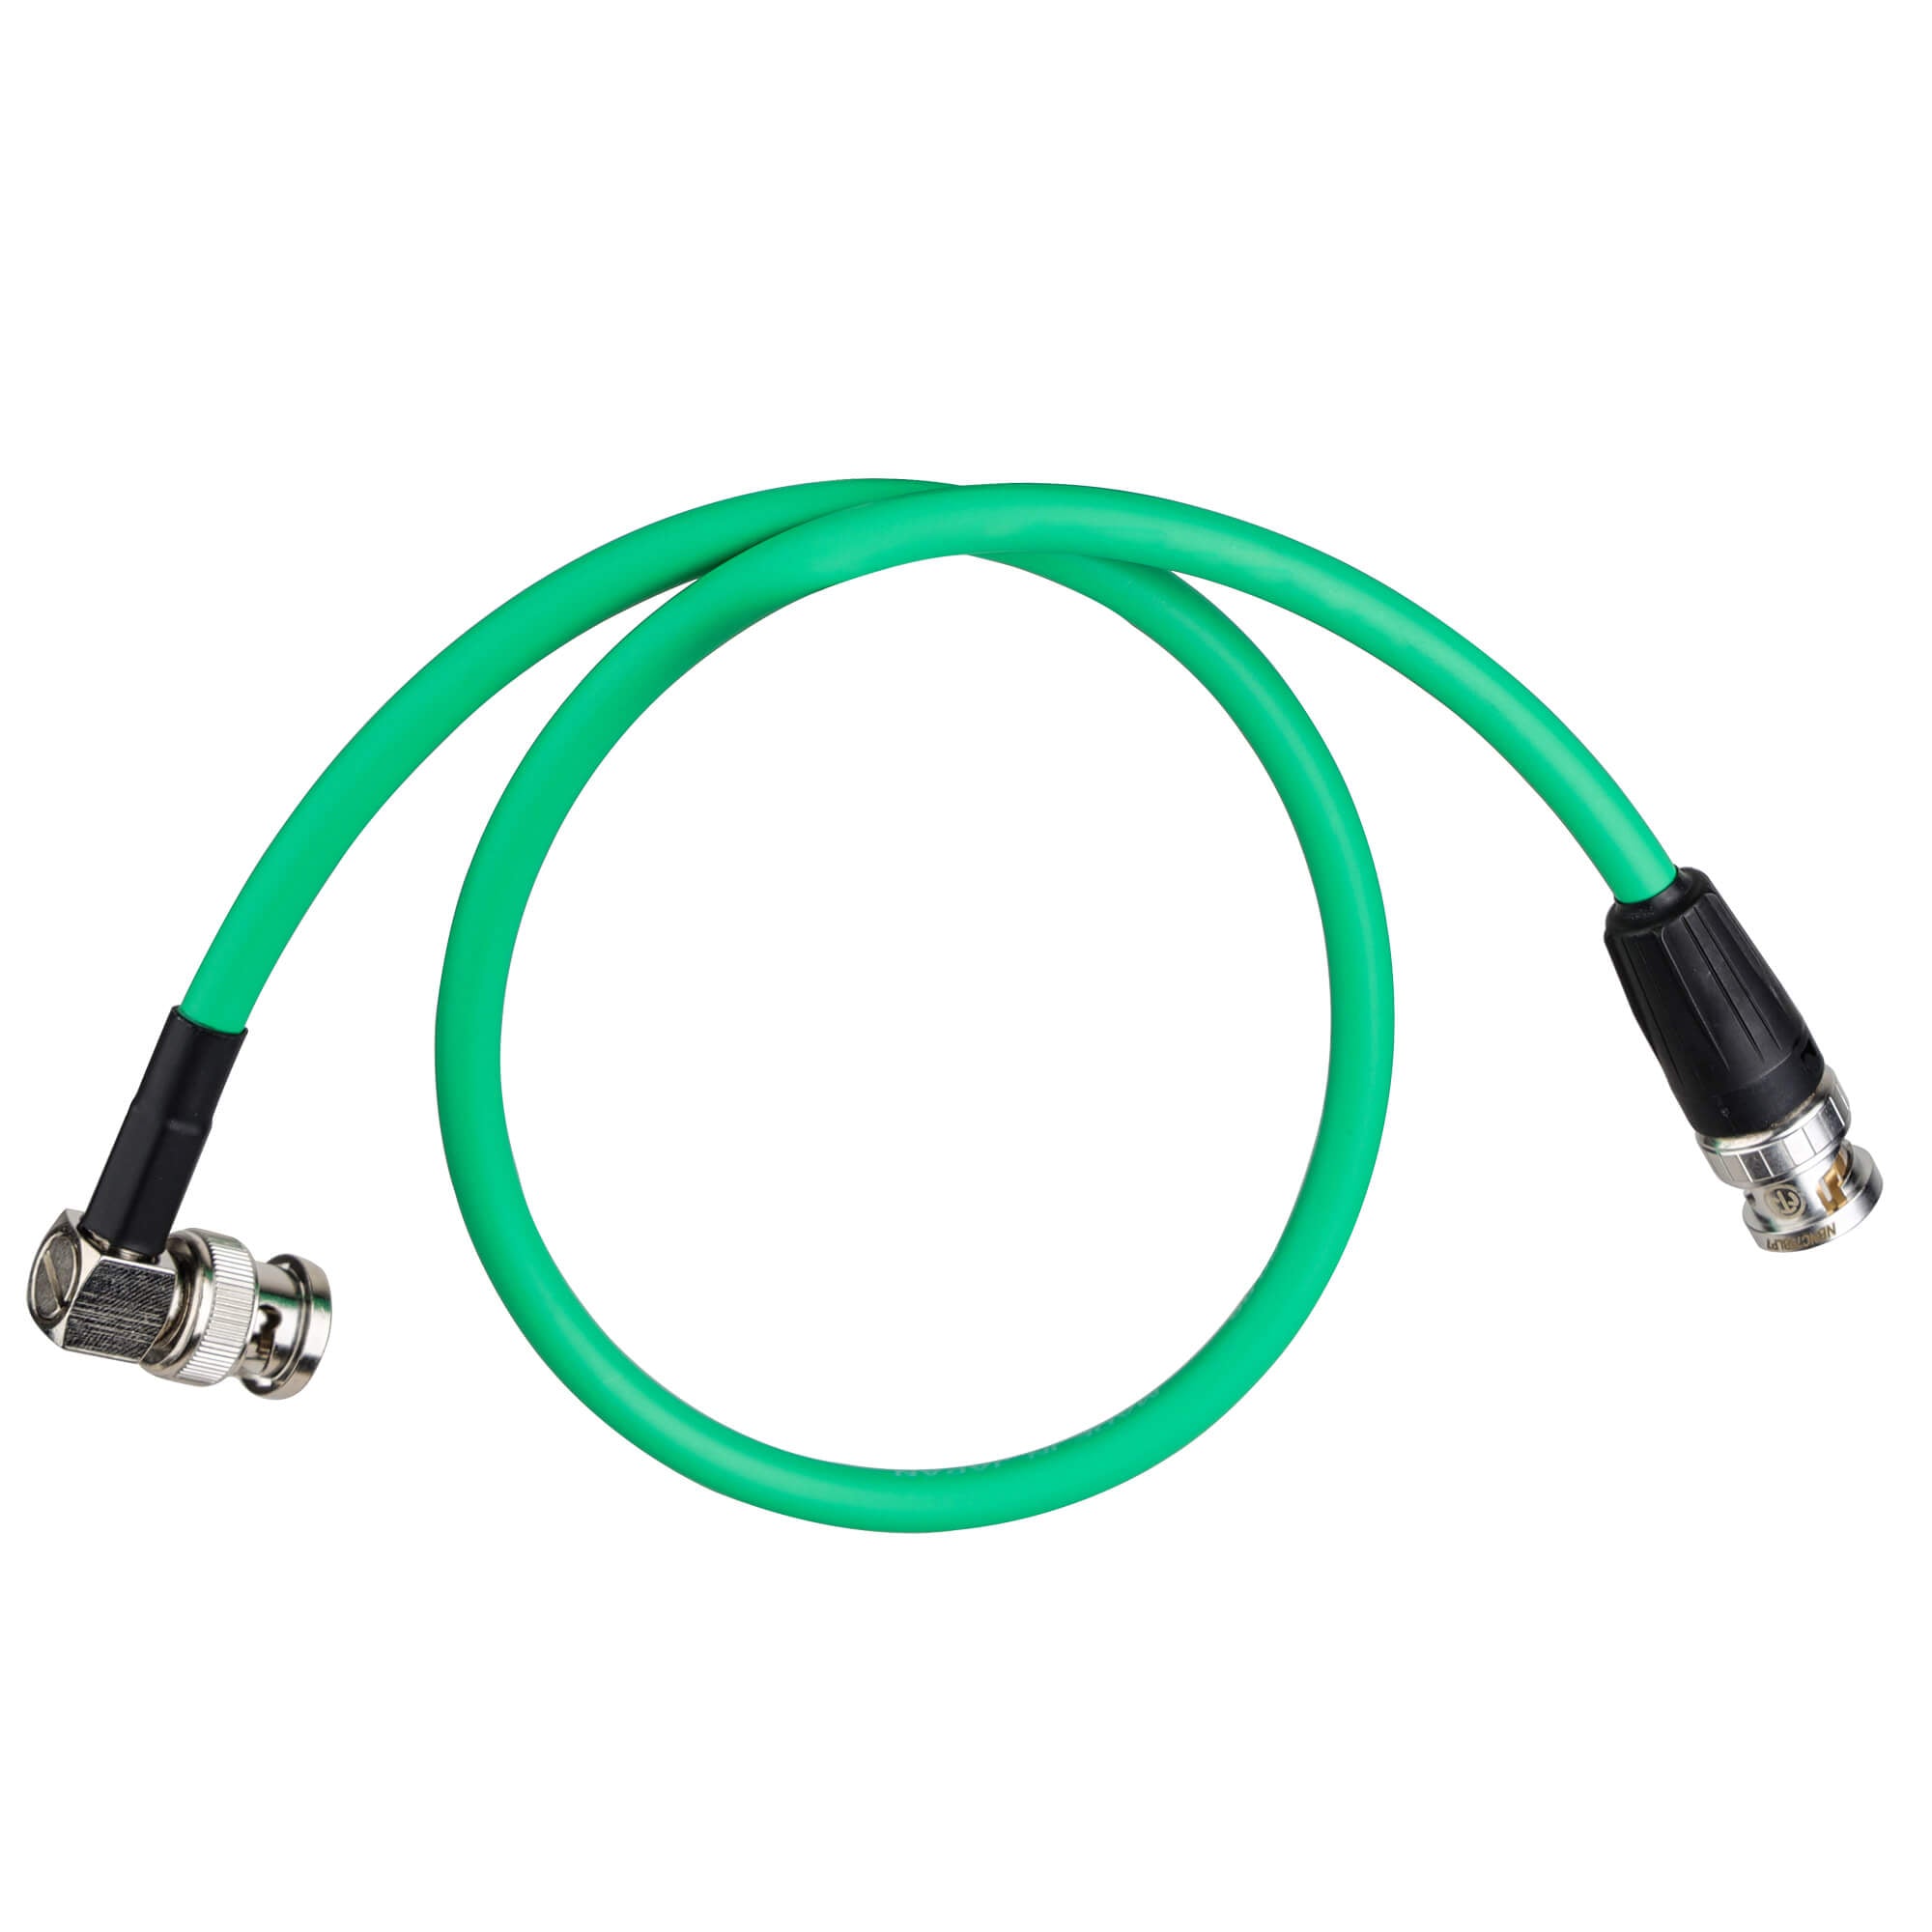 12G SDI cable